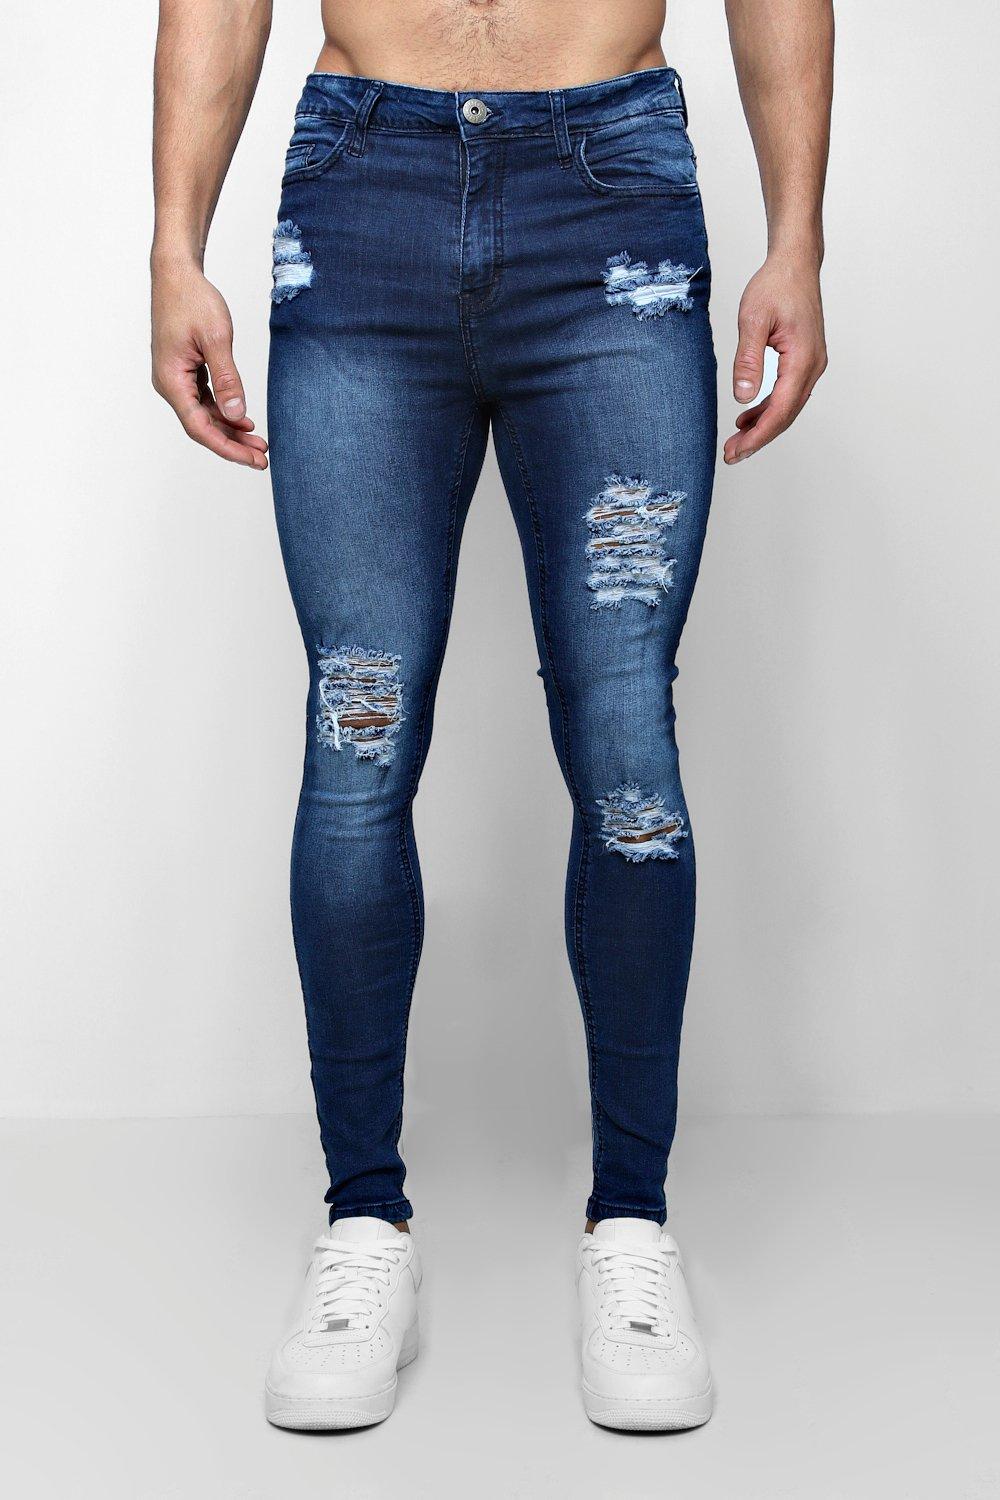 distressed denim jeans